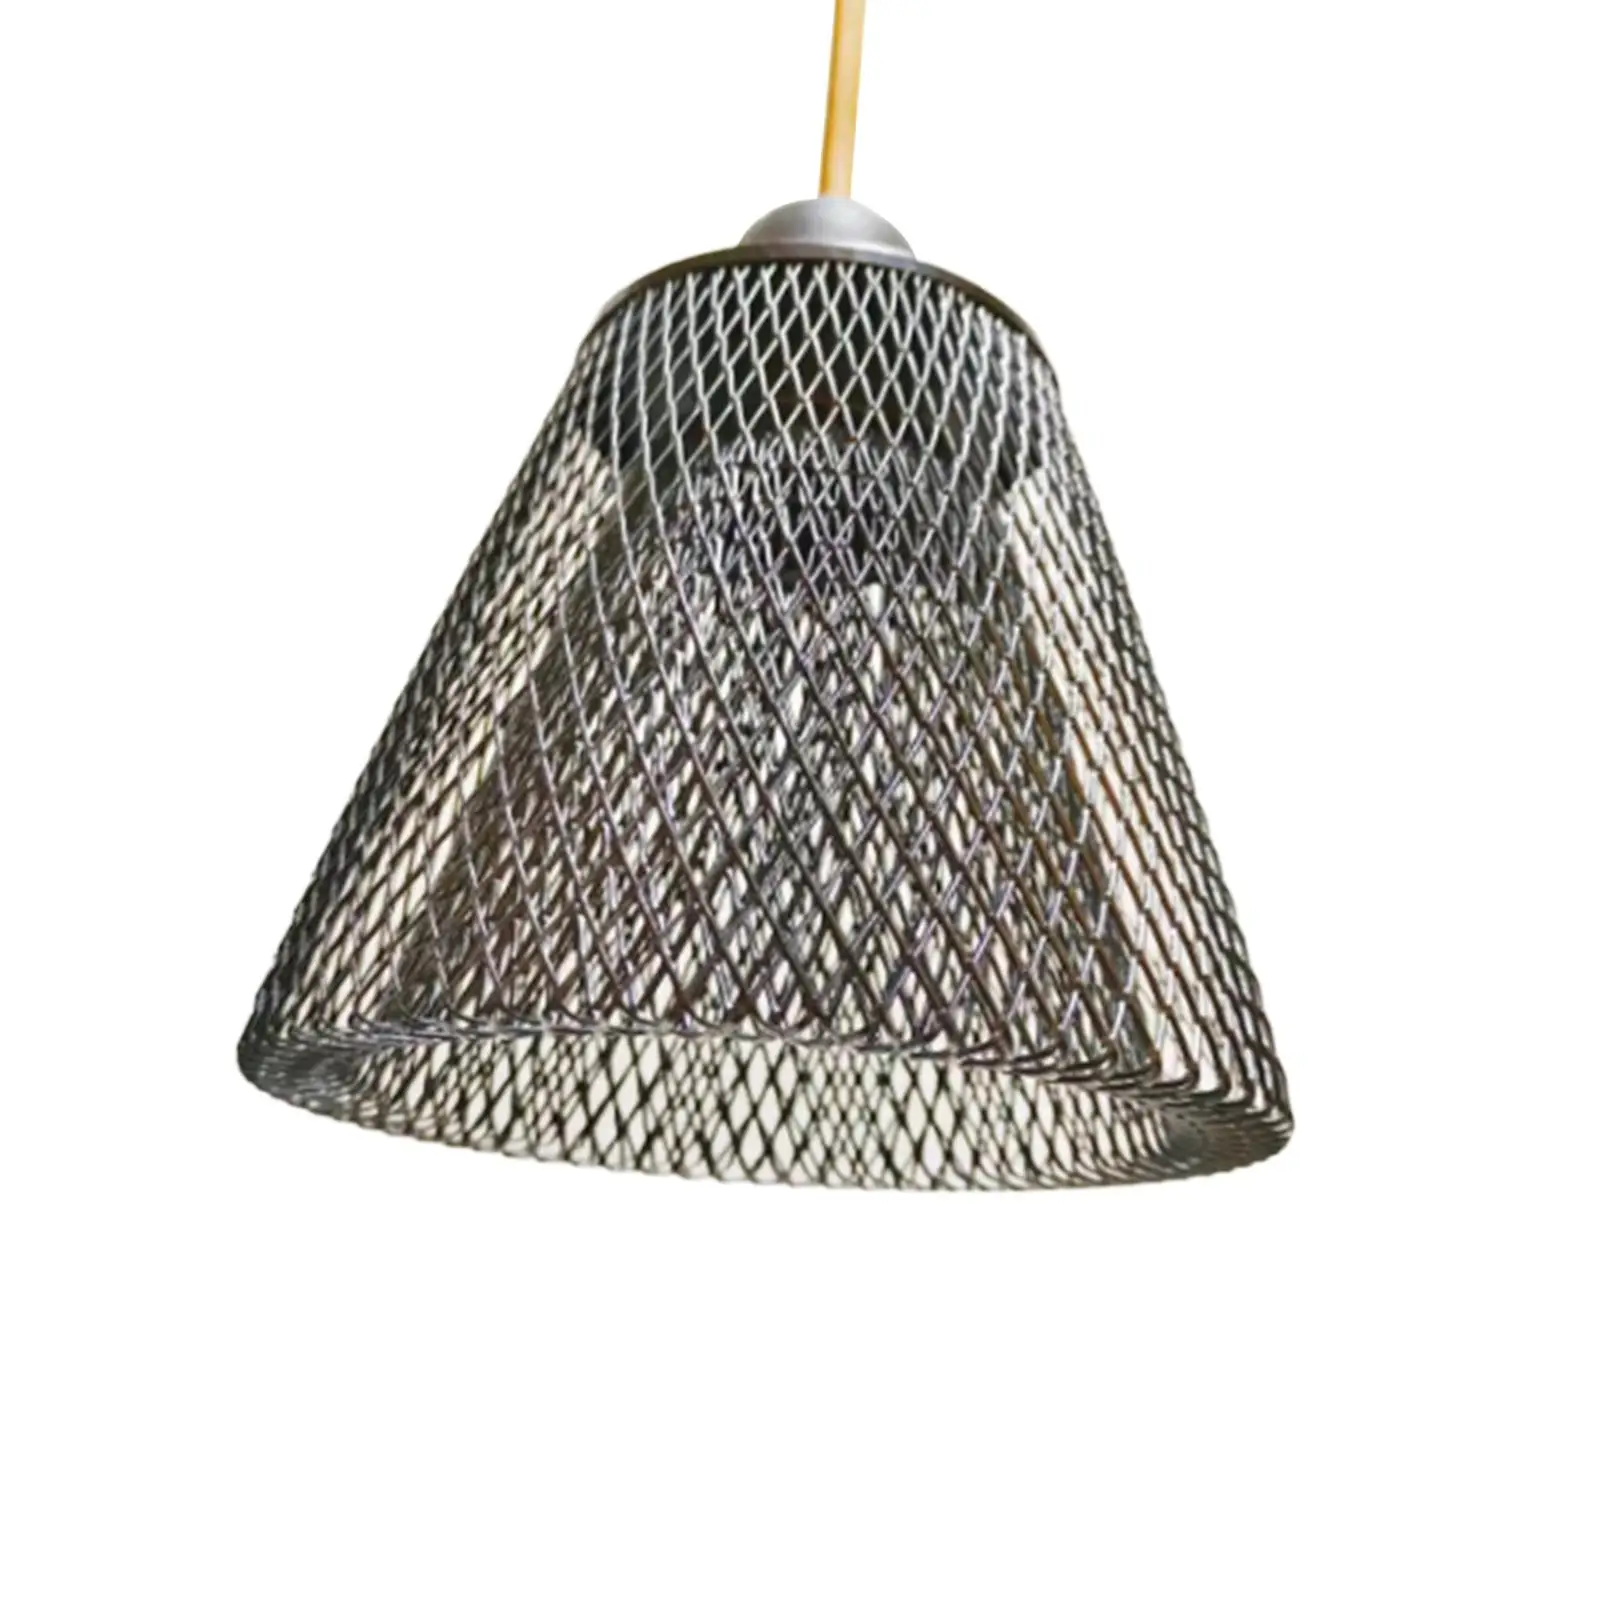 Pendant Lamp Shade Protective Bulb Light Cover for Teahouse Bathroom Home